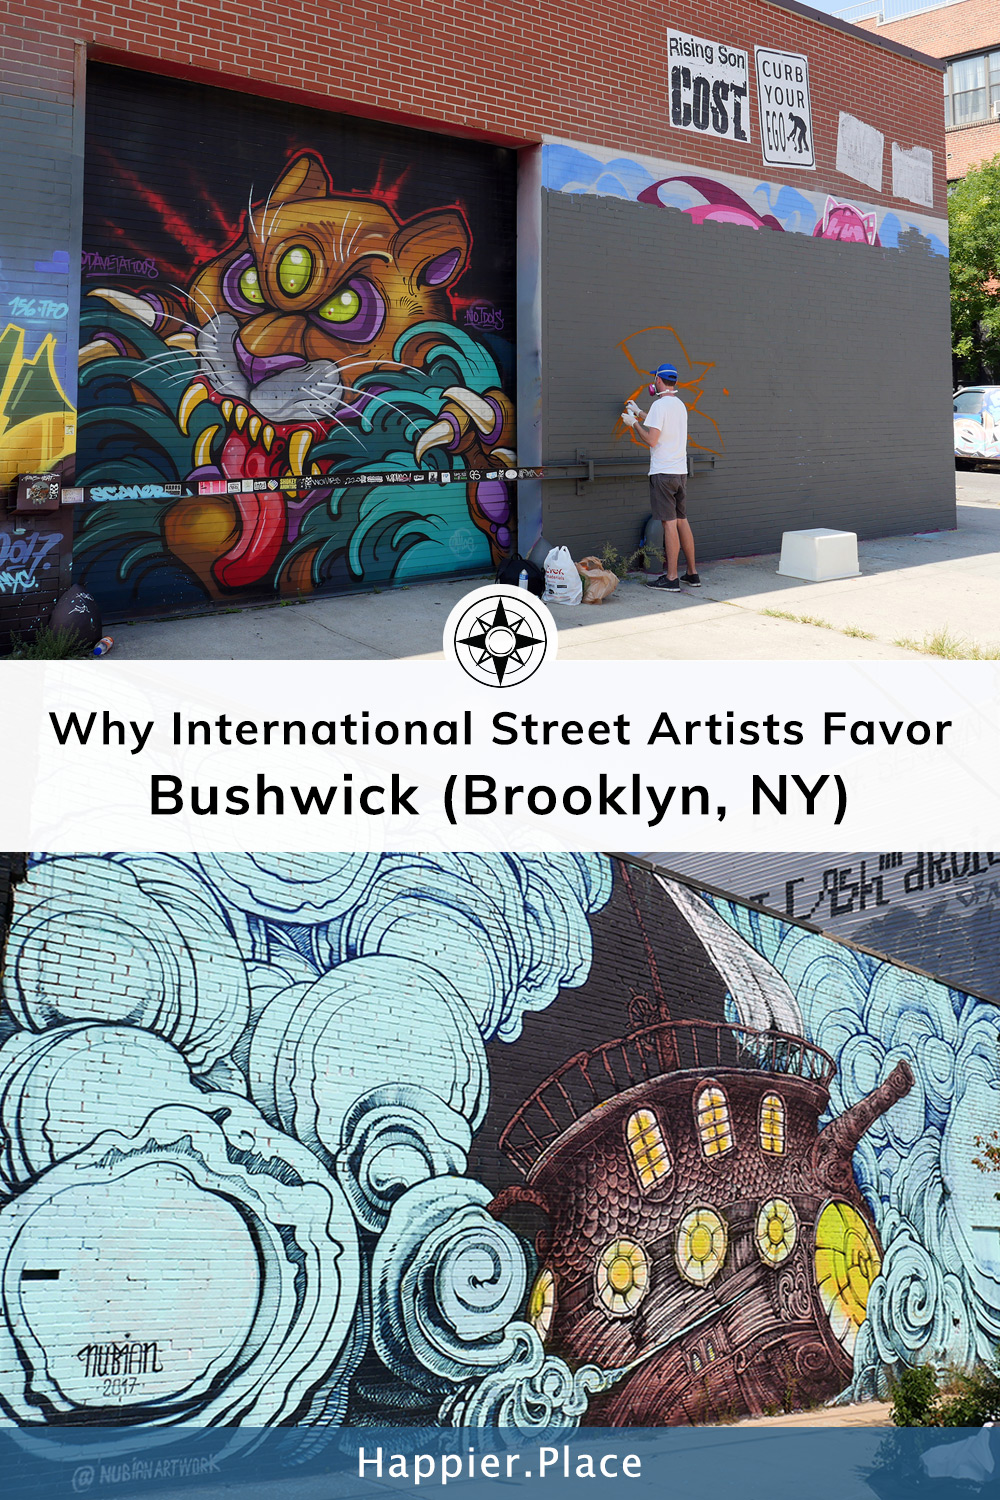 International Street Artists Favor Bushwick Brooklyn NY - Nubian Art ship tiger Australian graffiti